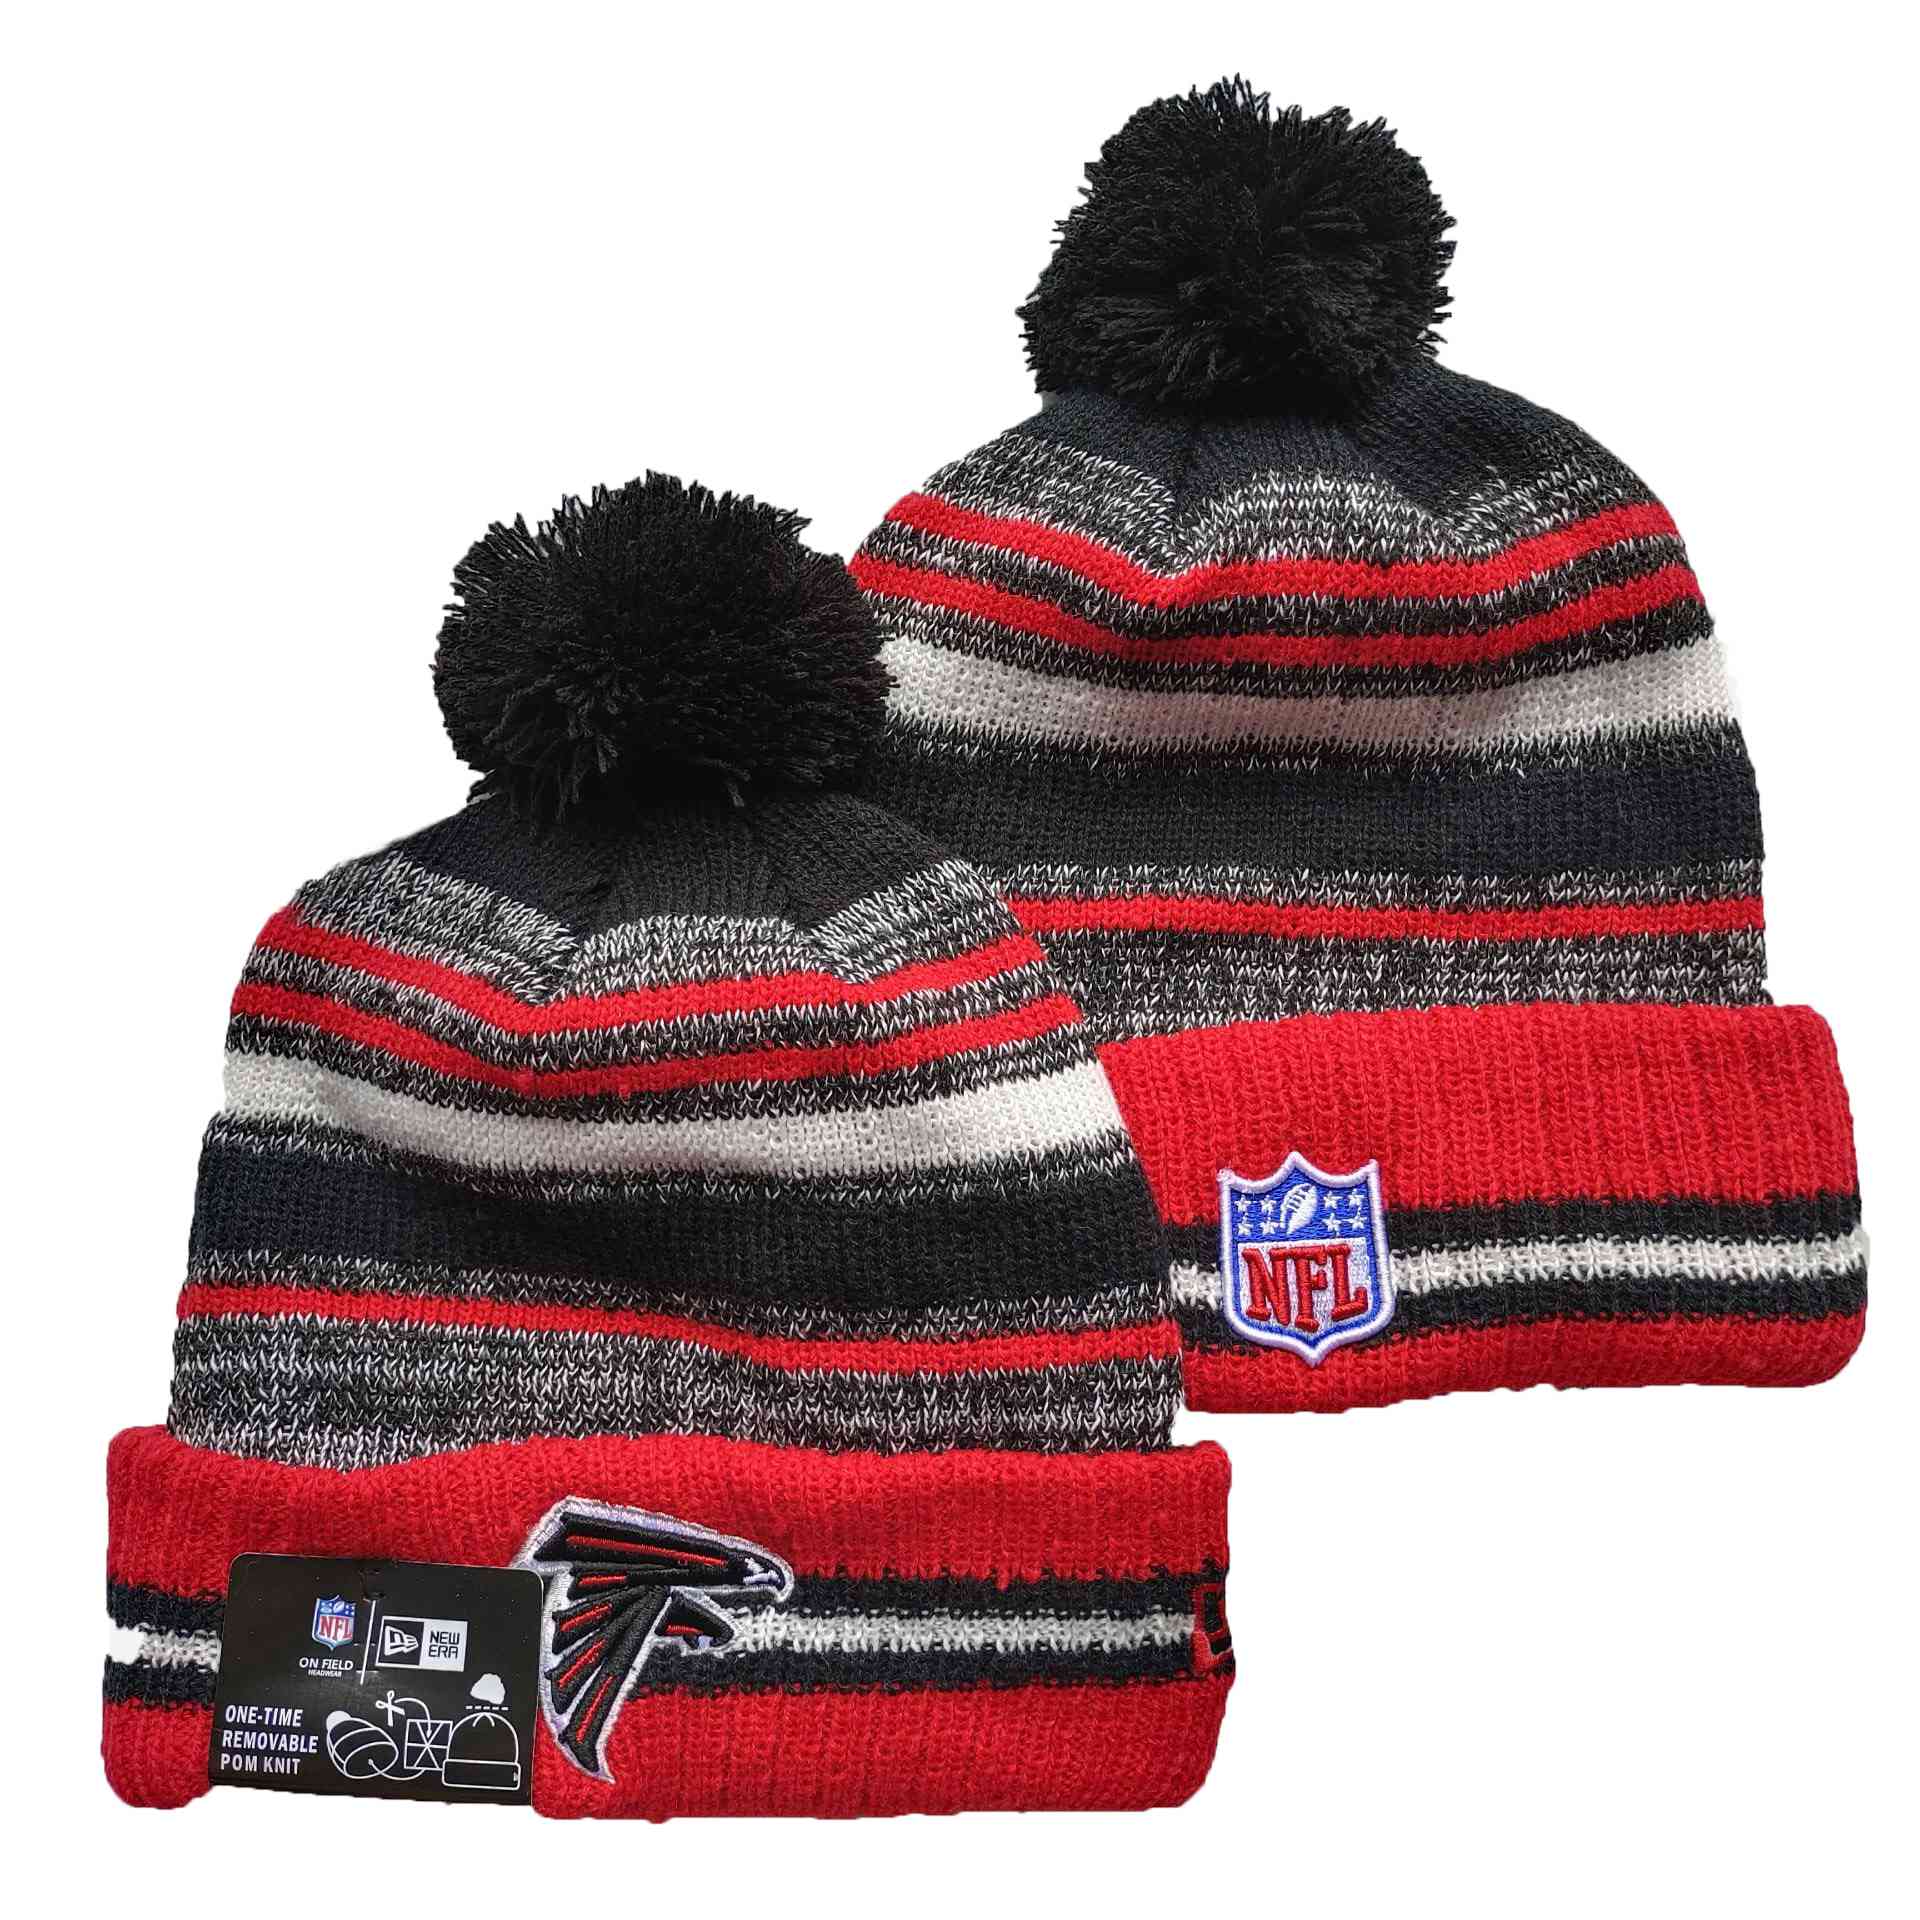 NFL Atlanta Falcons Beanies Knit Hats-YD876